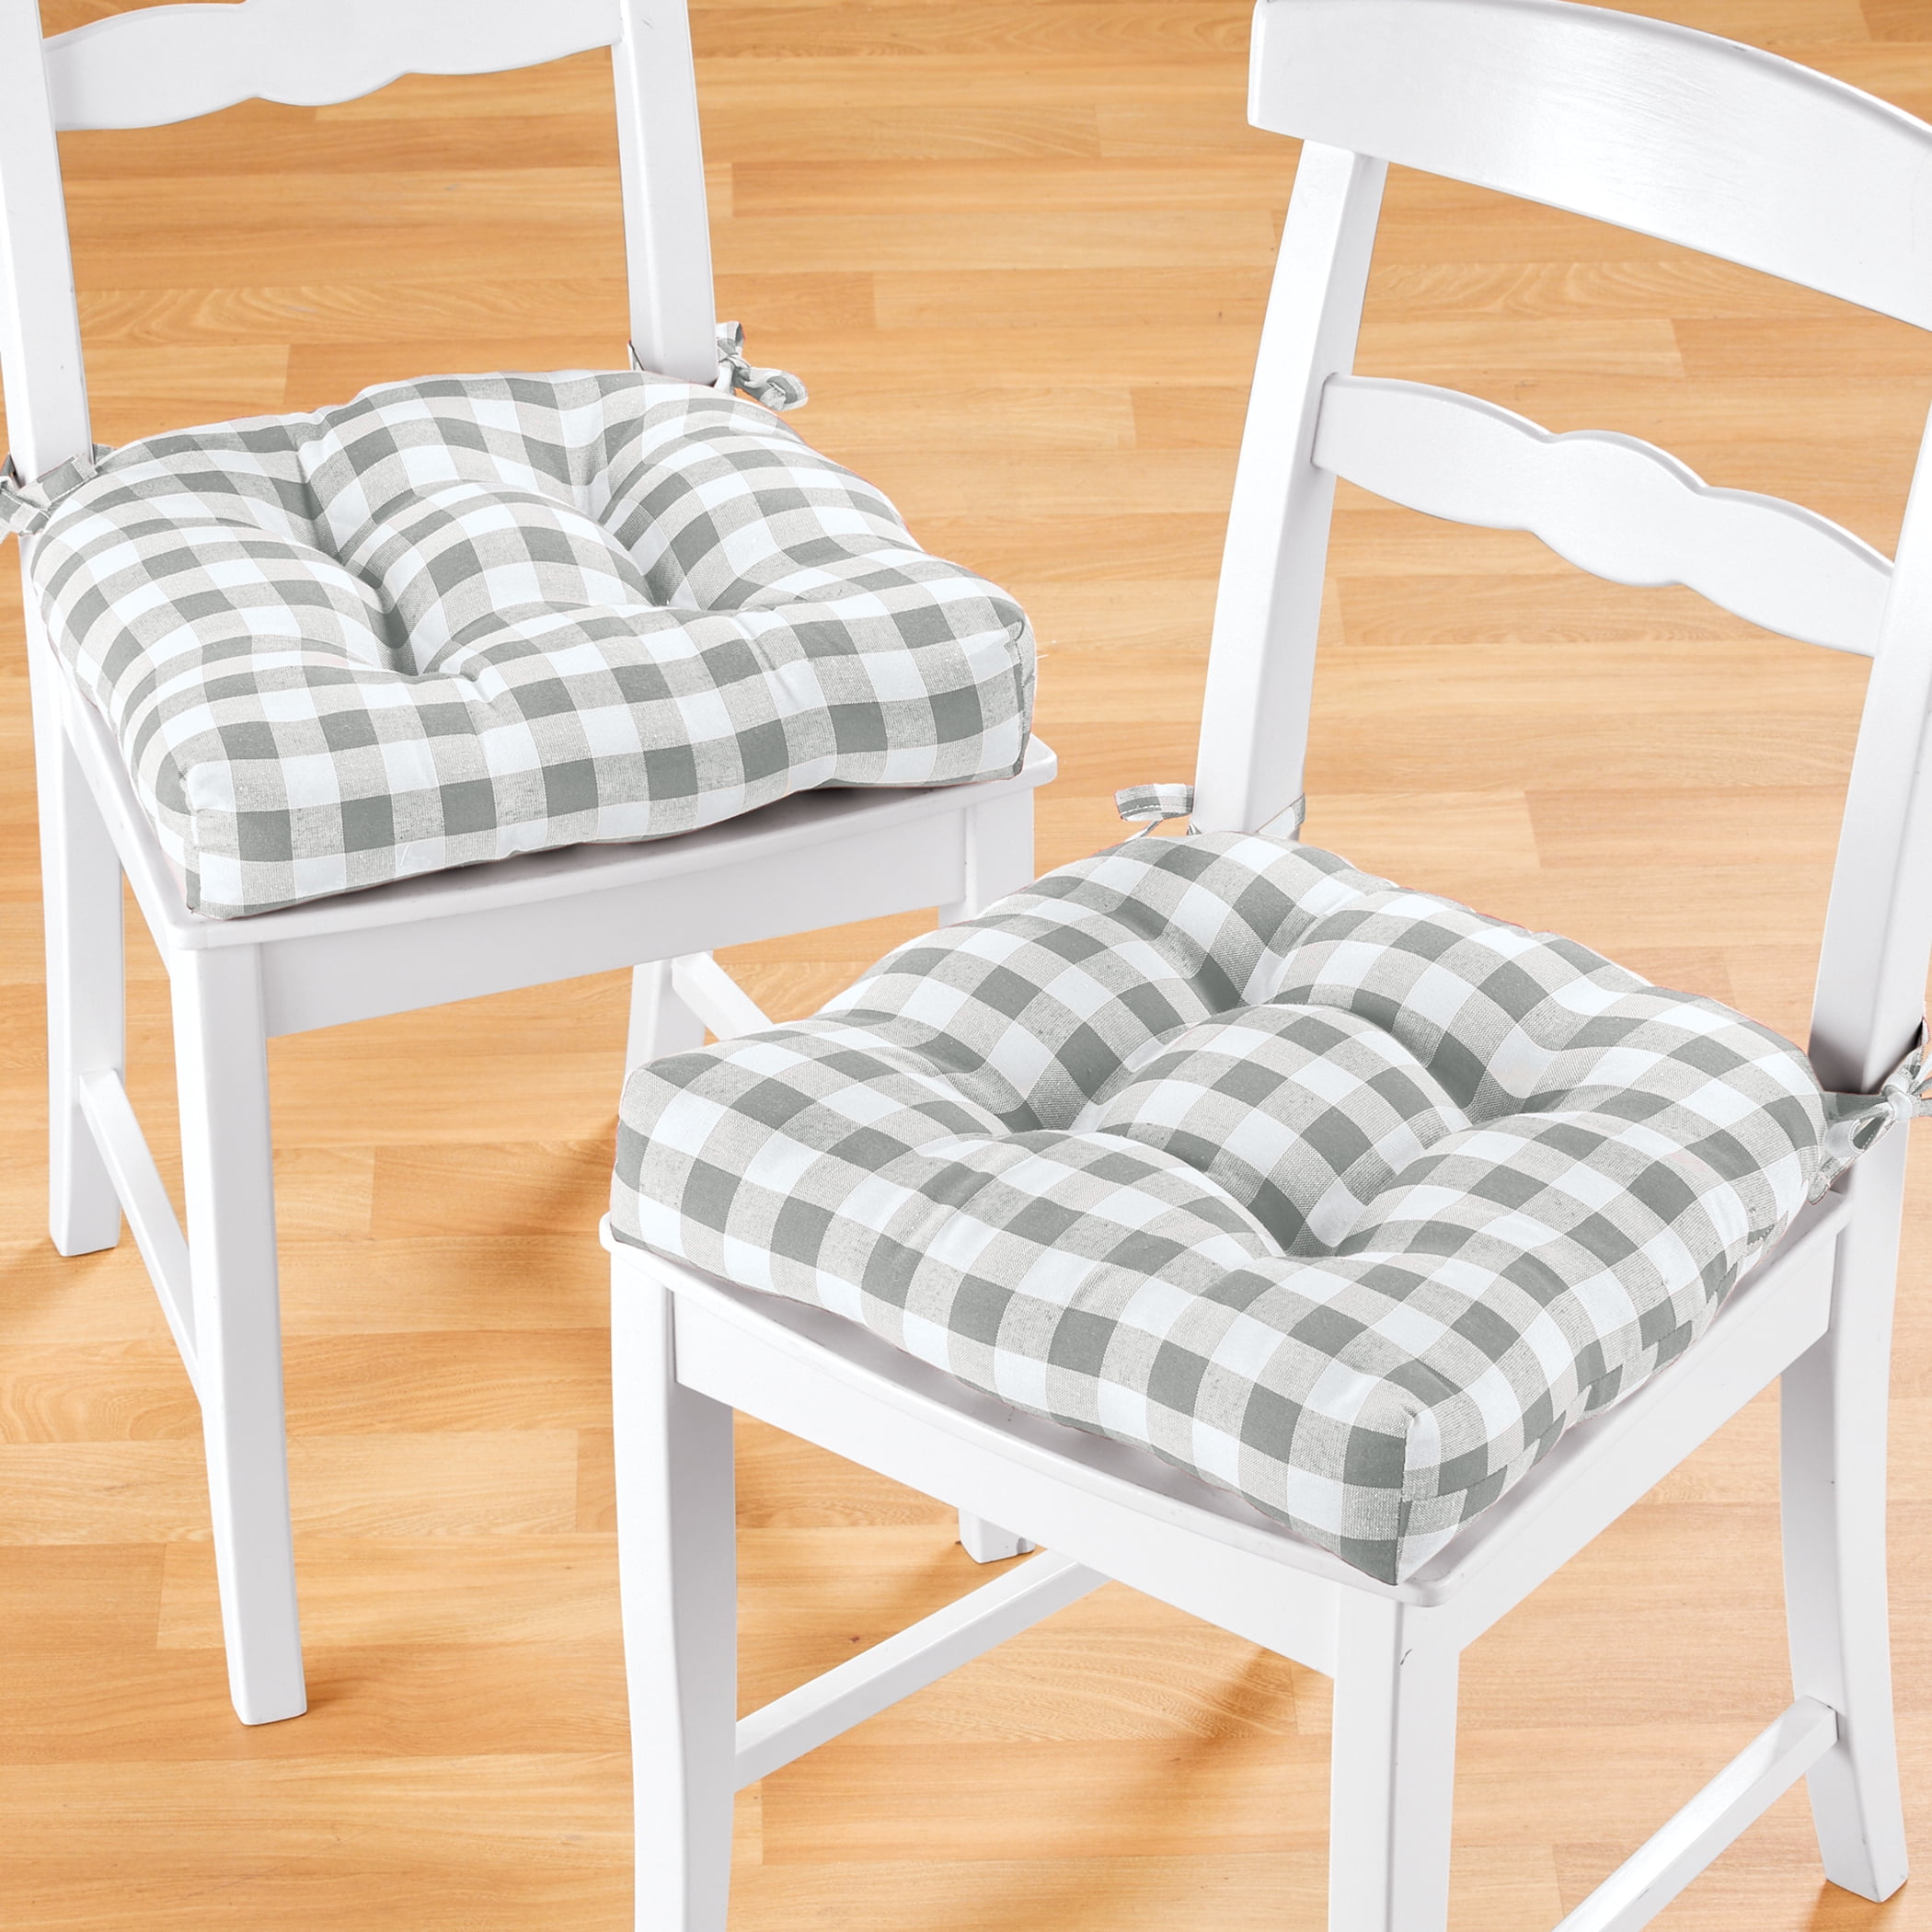 Achim Buffalo Check Tufted Chair Seat Cushions - Set of 2 - Burgundy Black/White